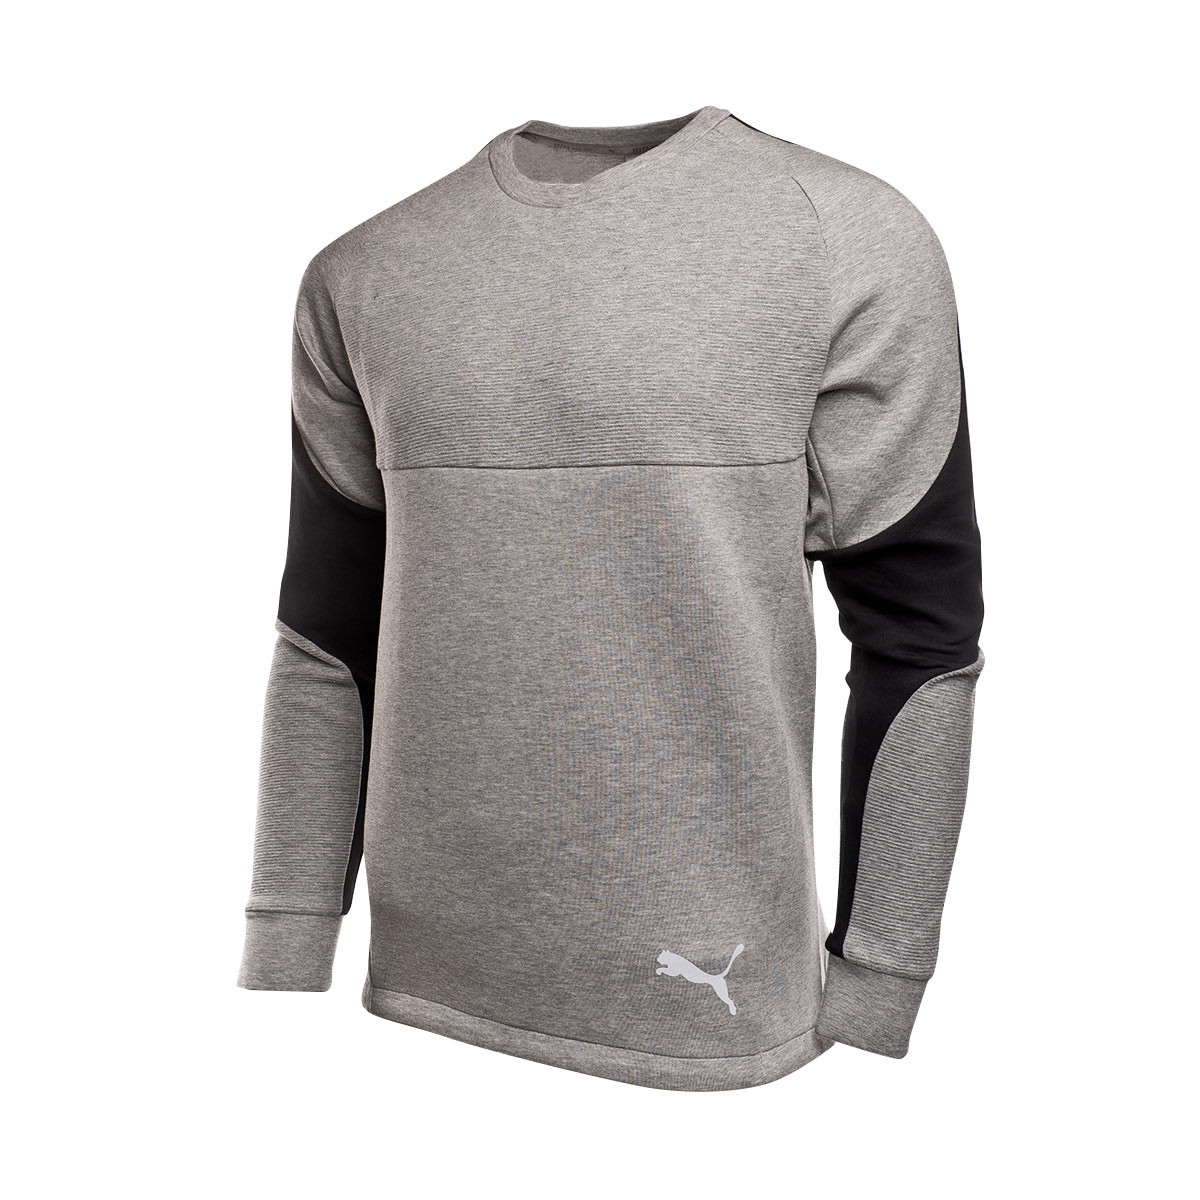 gray puma sweatshirt